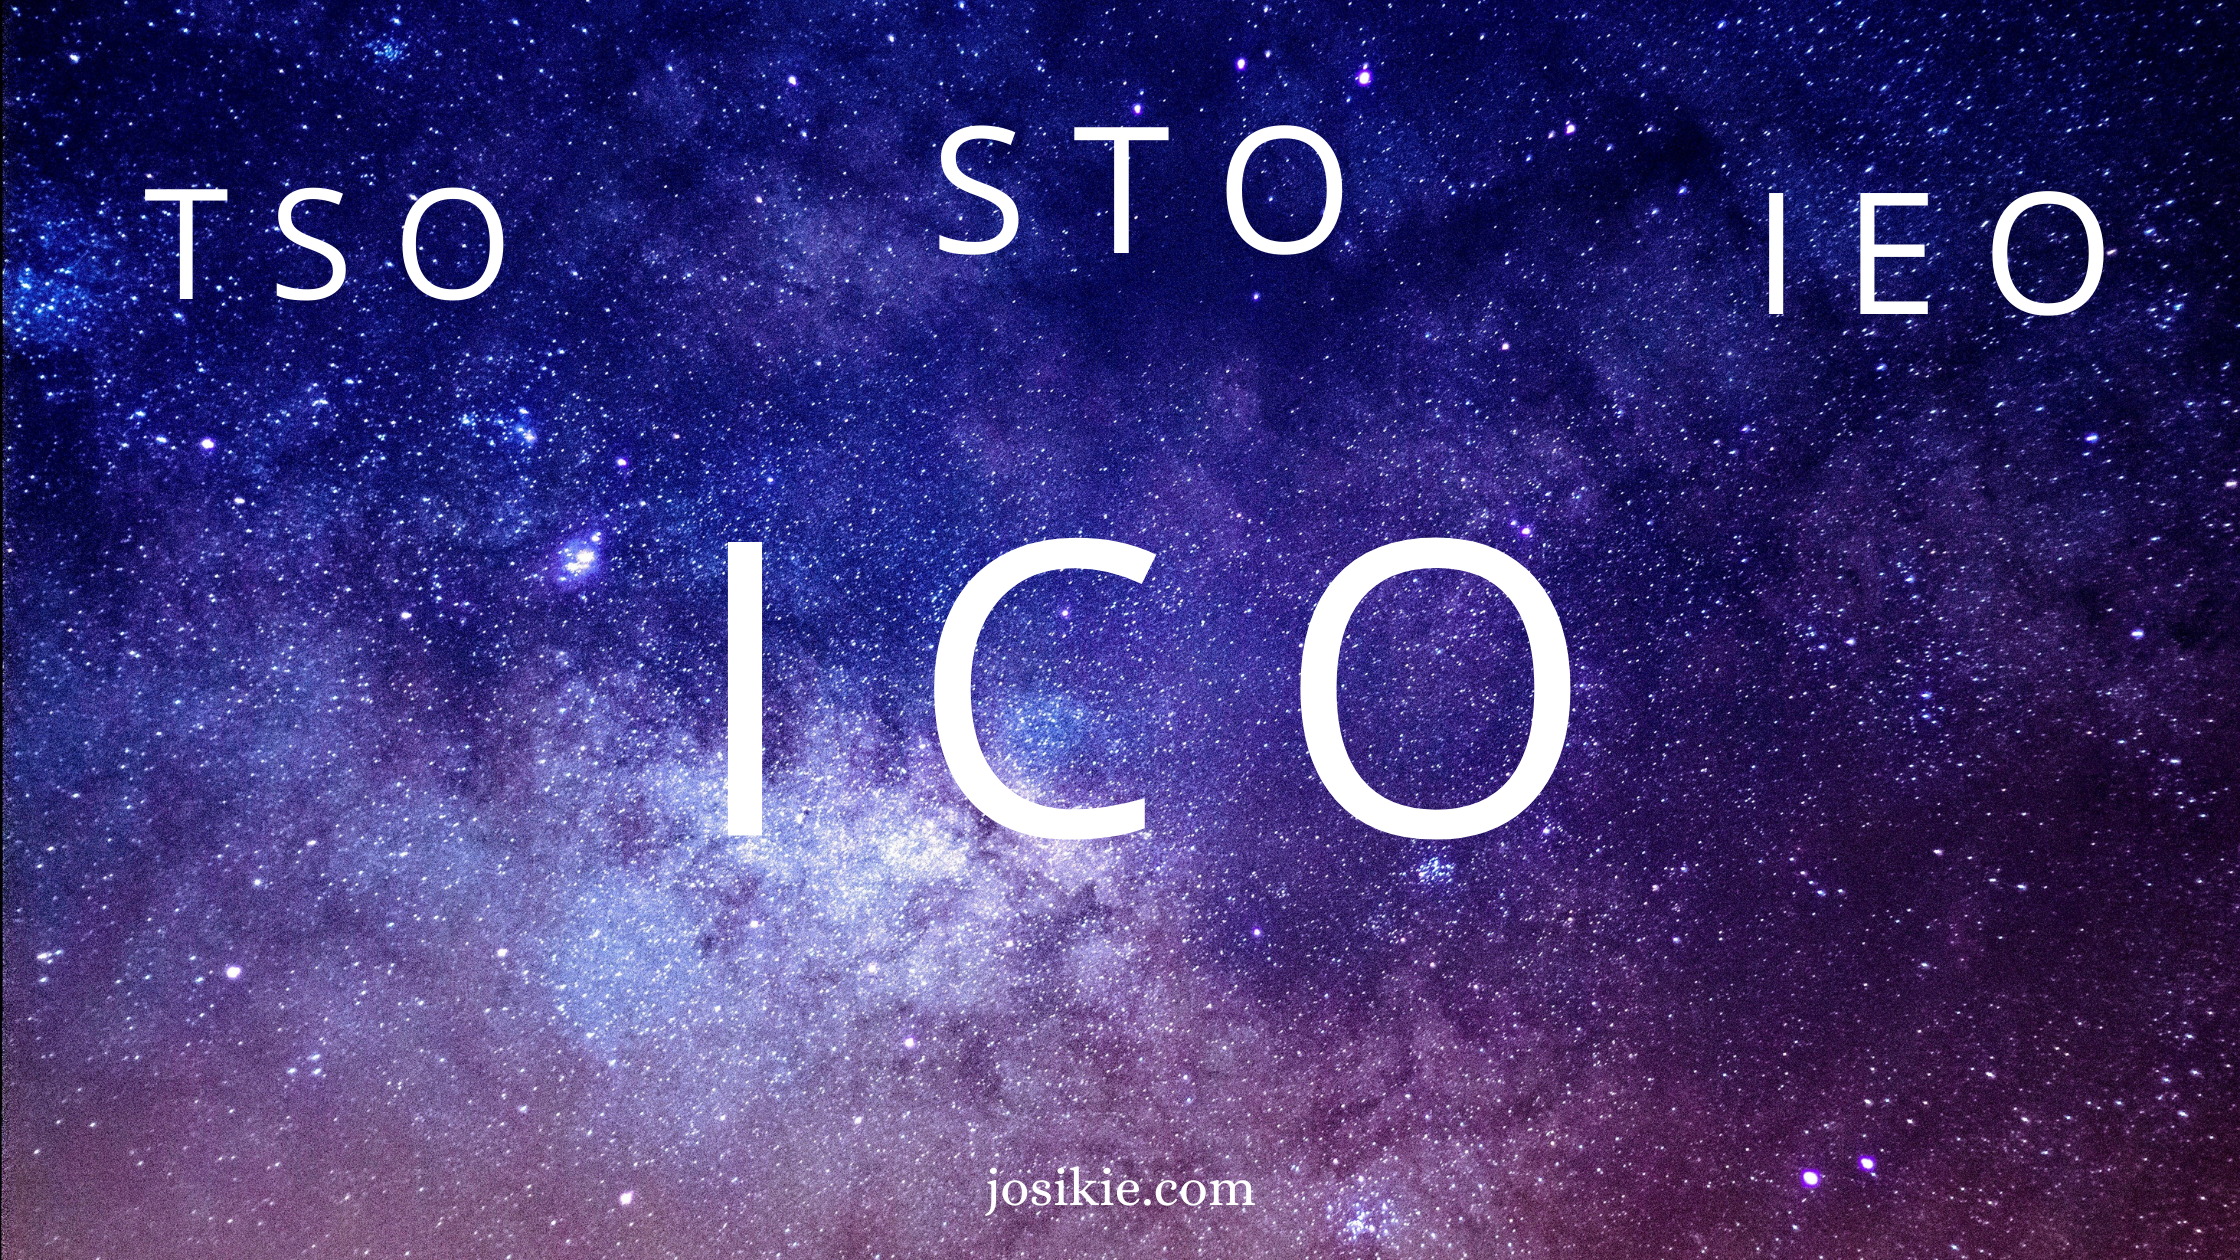 Pengertian Tokenisasi ICO STO